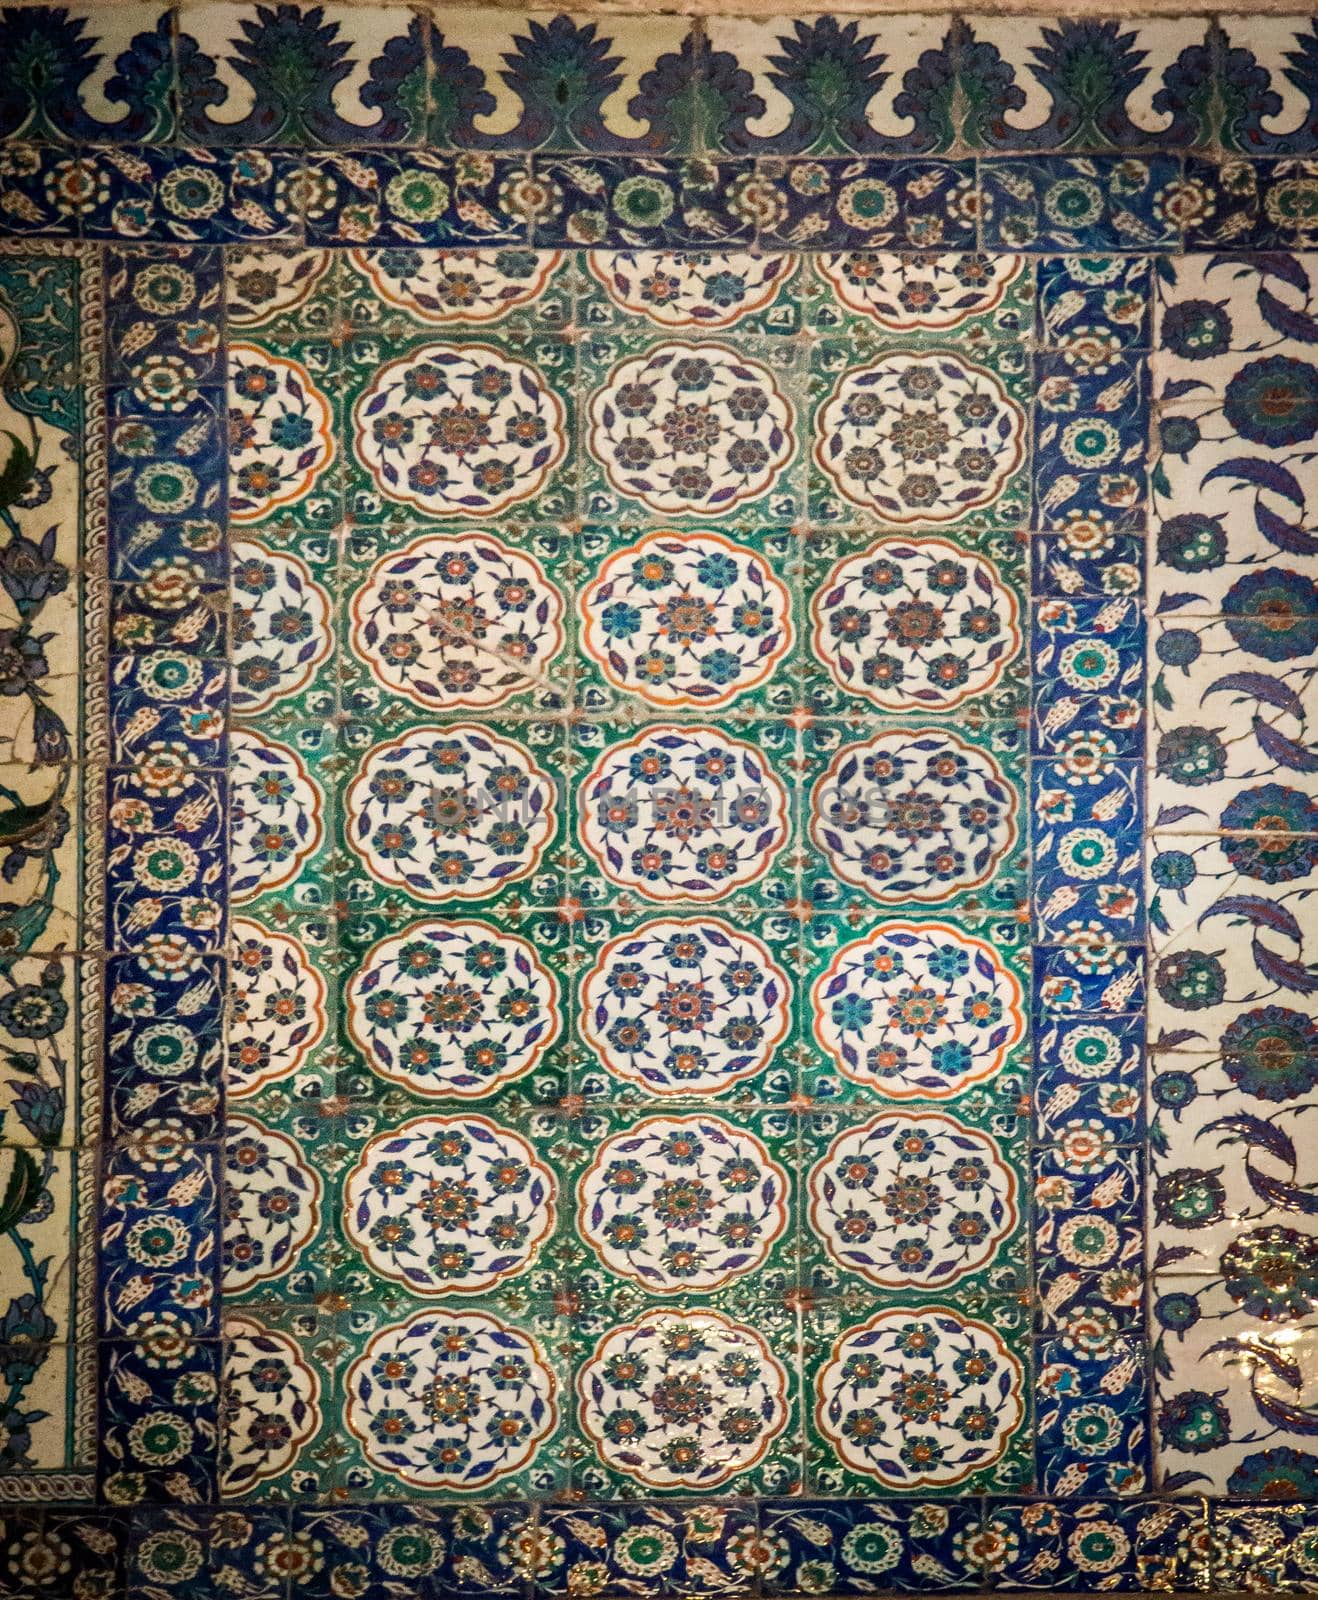  Ottoman ancient Handmade Turkish Tiles by berkay